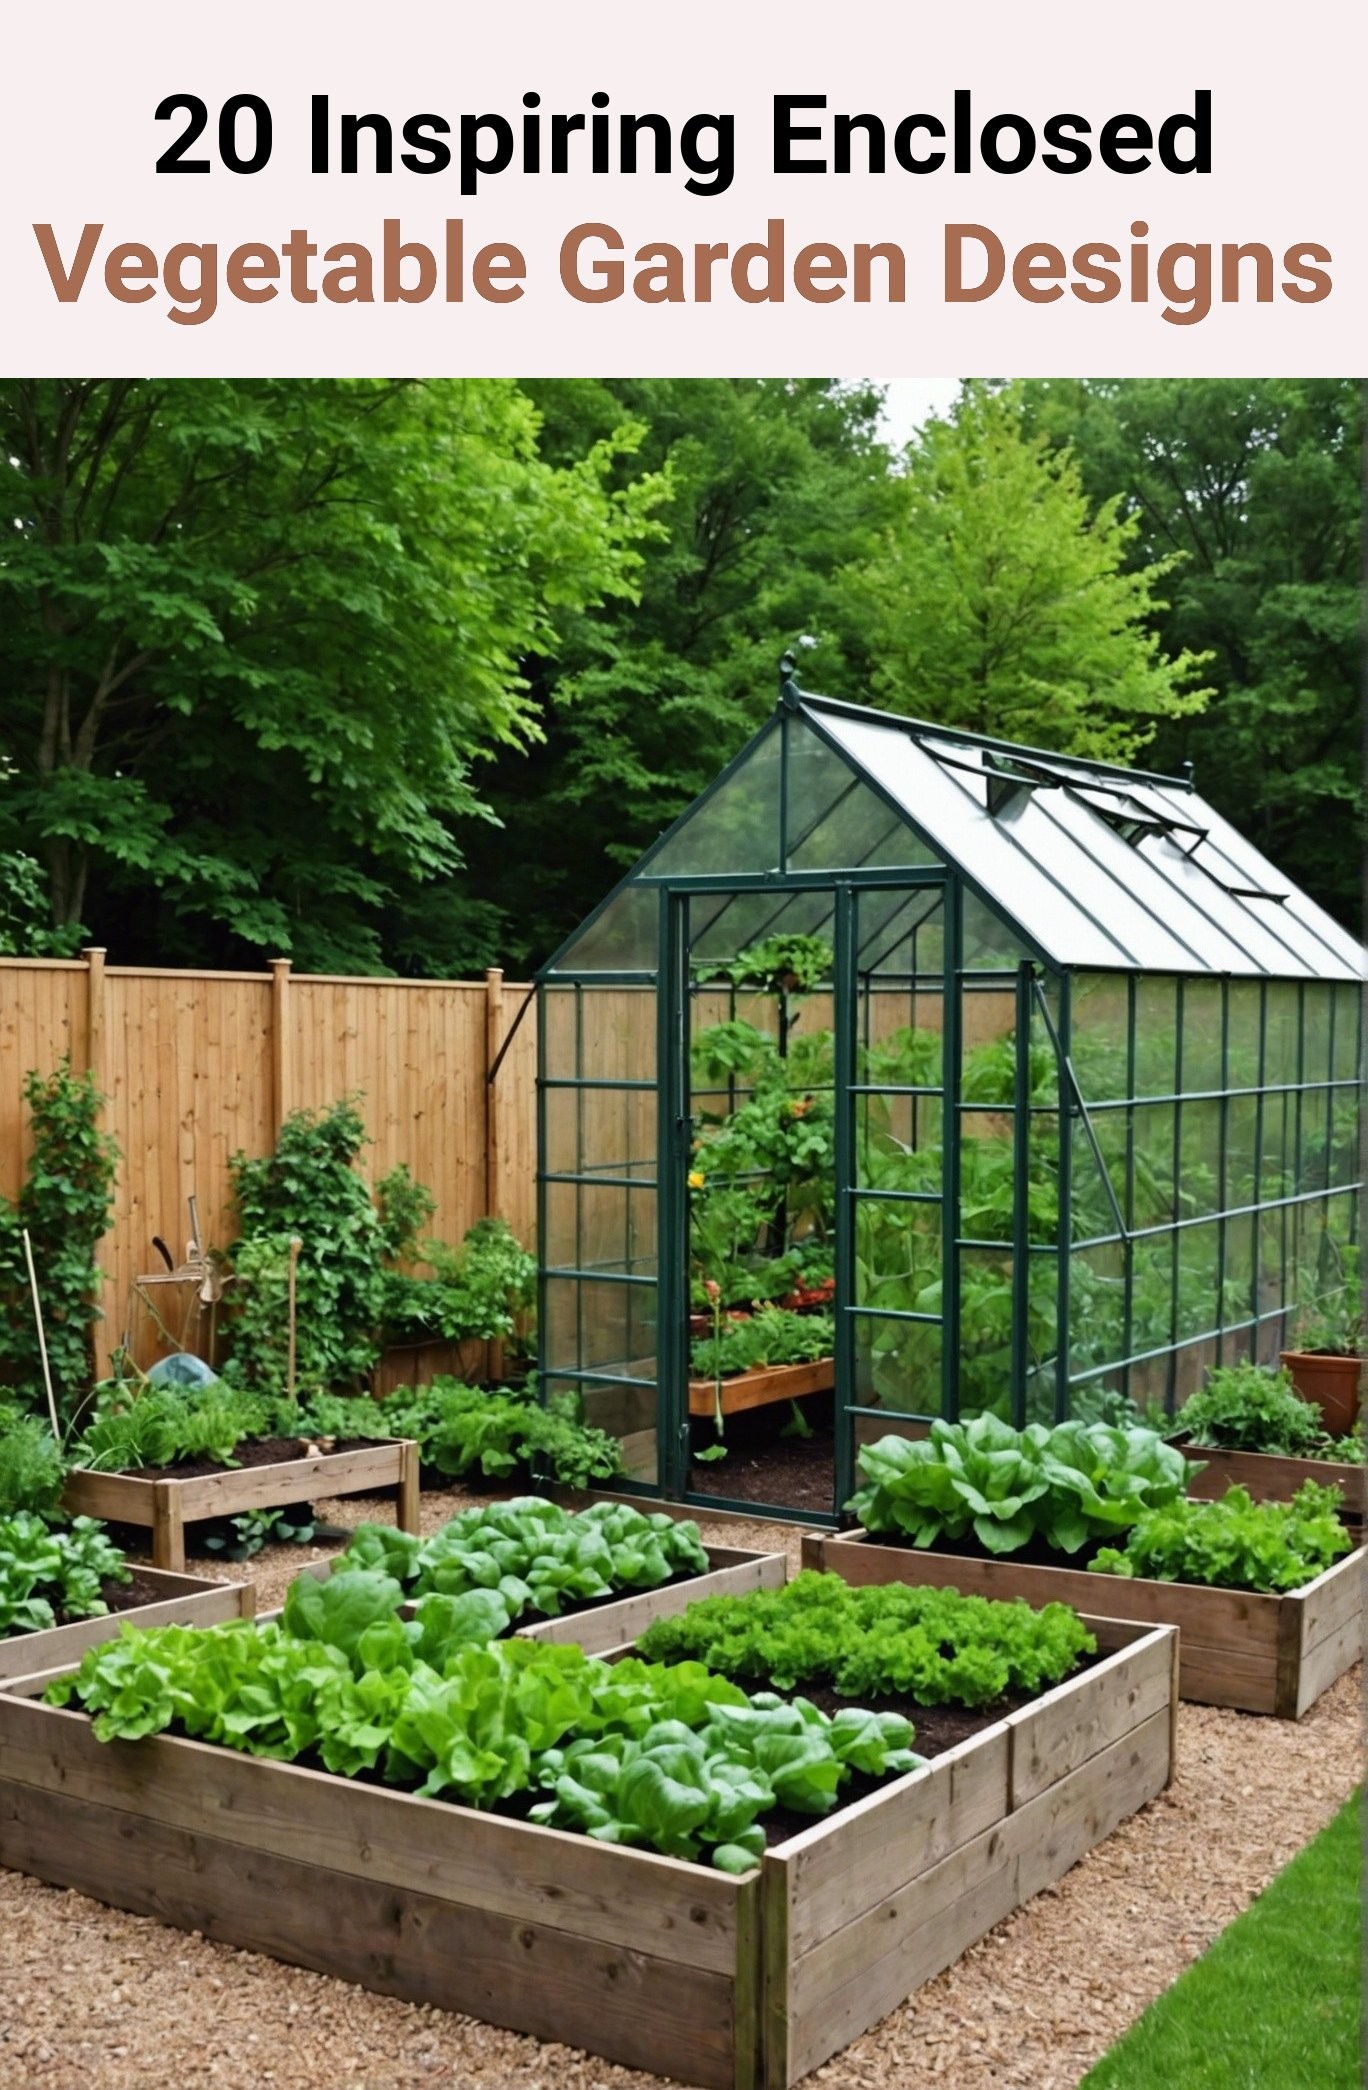 20 Inspiring Enclosed Vegetable Garden Designs